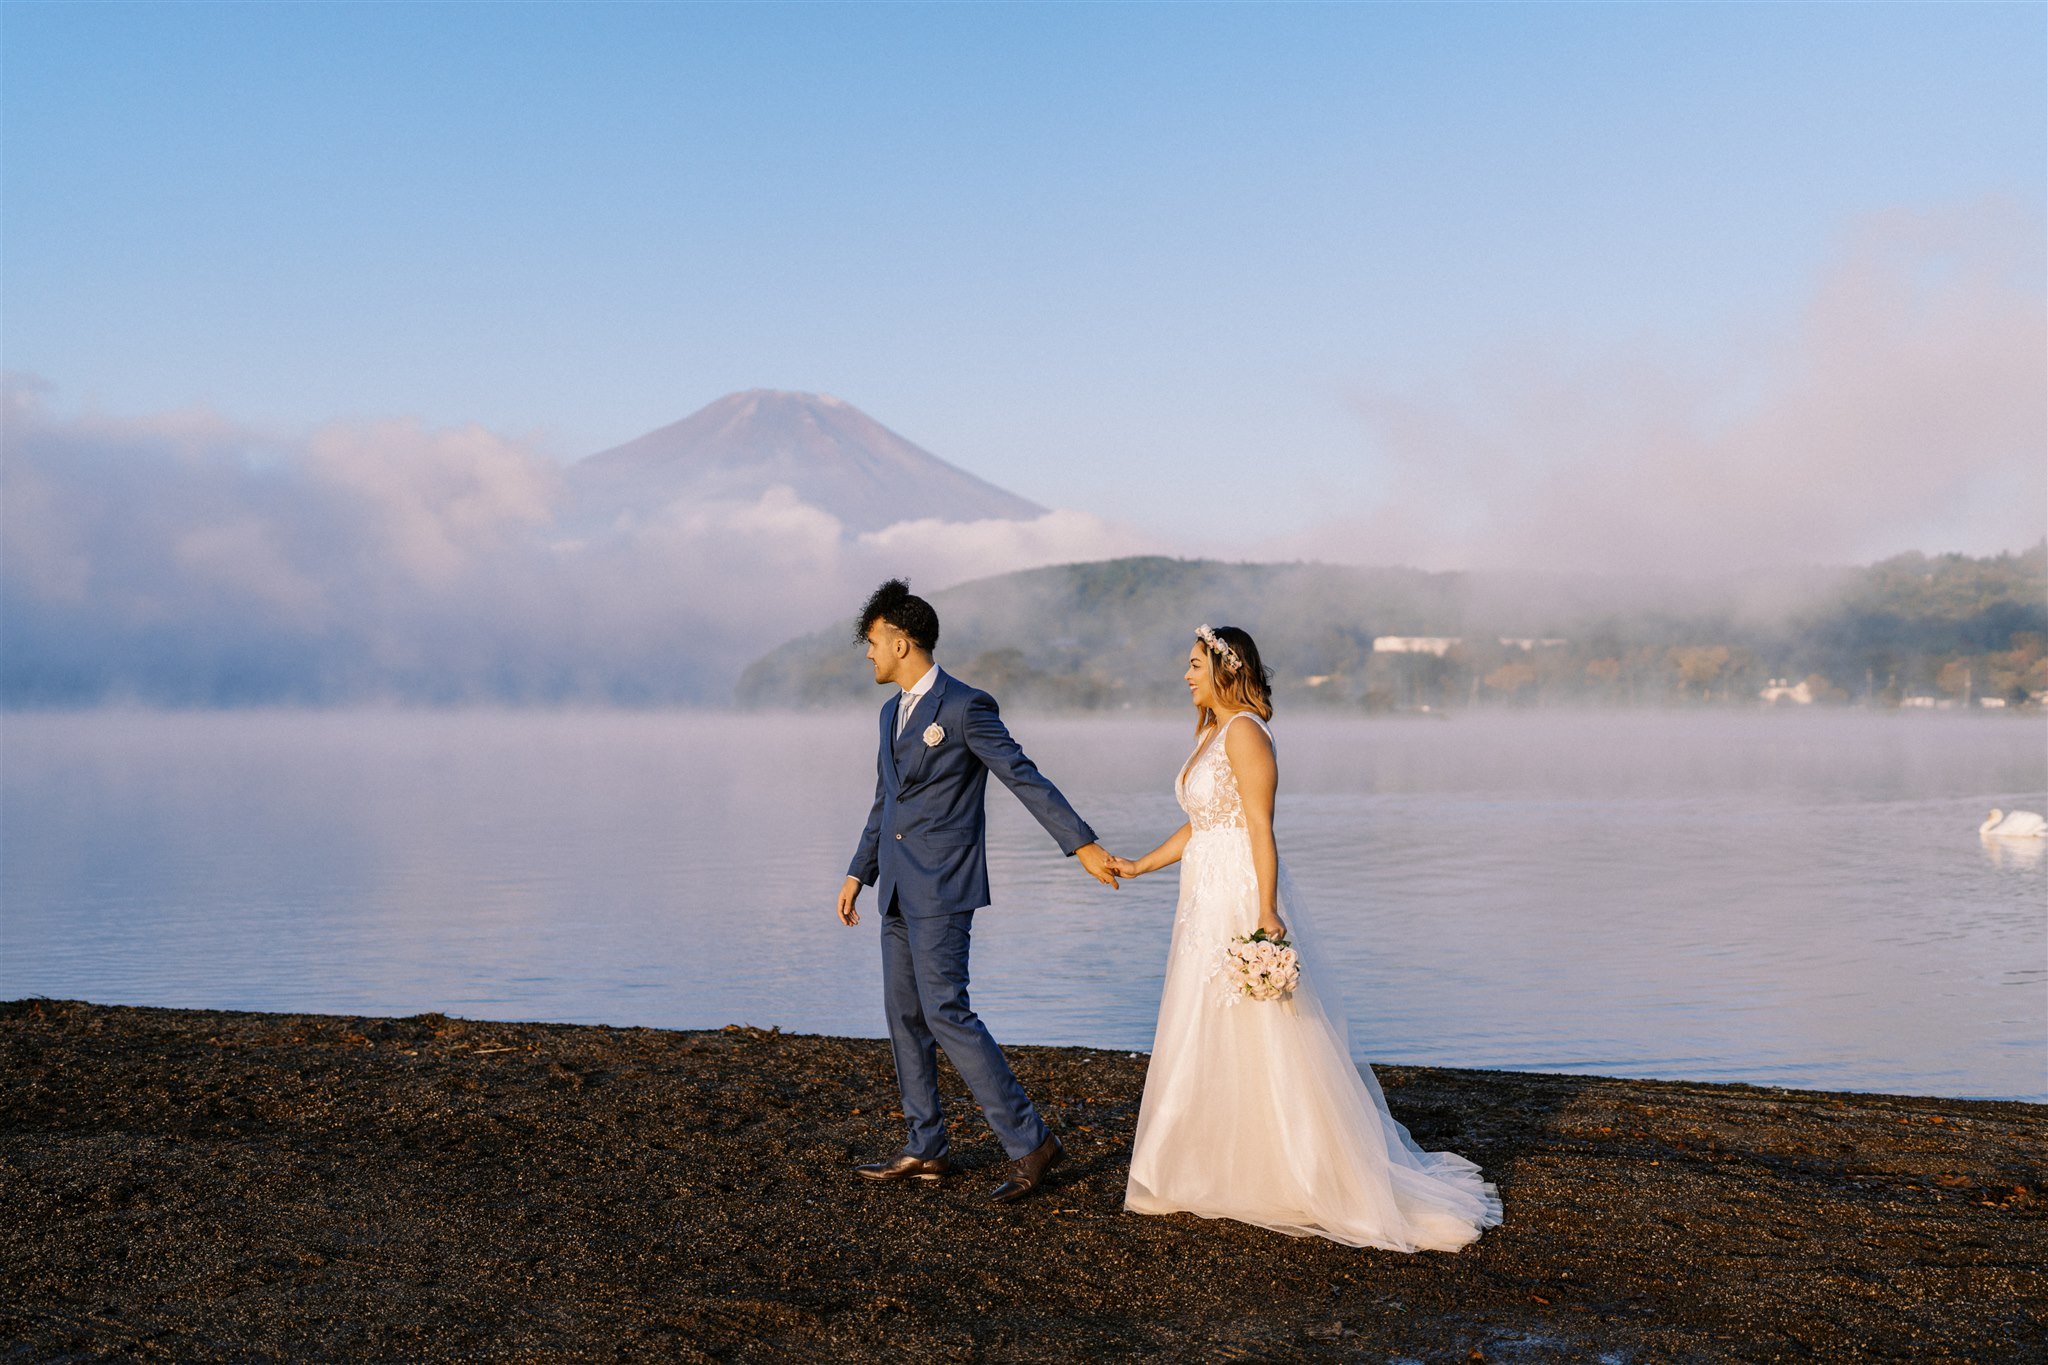 An Intimate Elopement Ceremony at Mount Fuji, Kawaguchiko, Japan